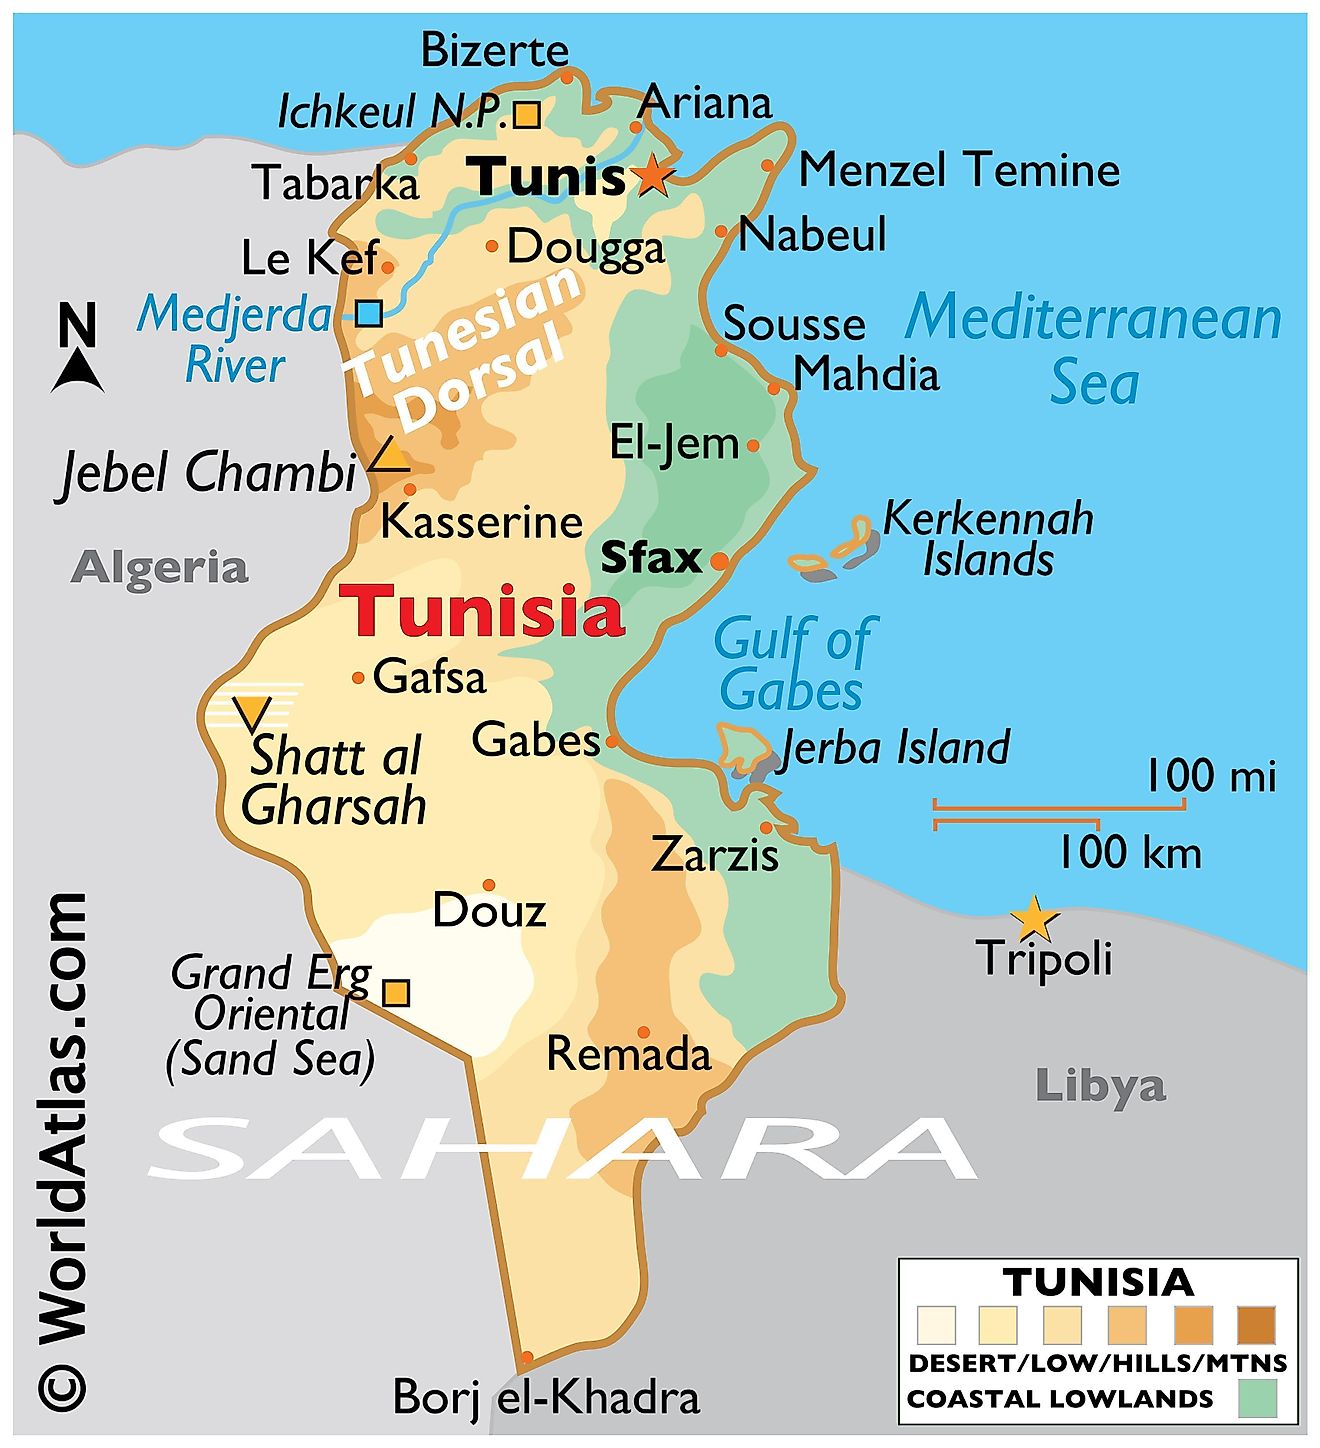 Tunisia Maps & Facts - World Atlas